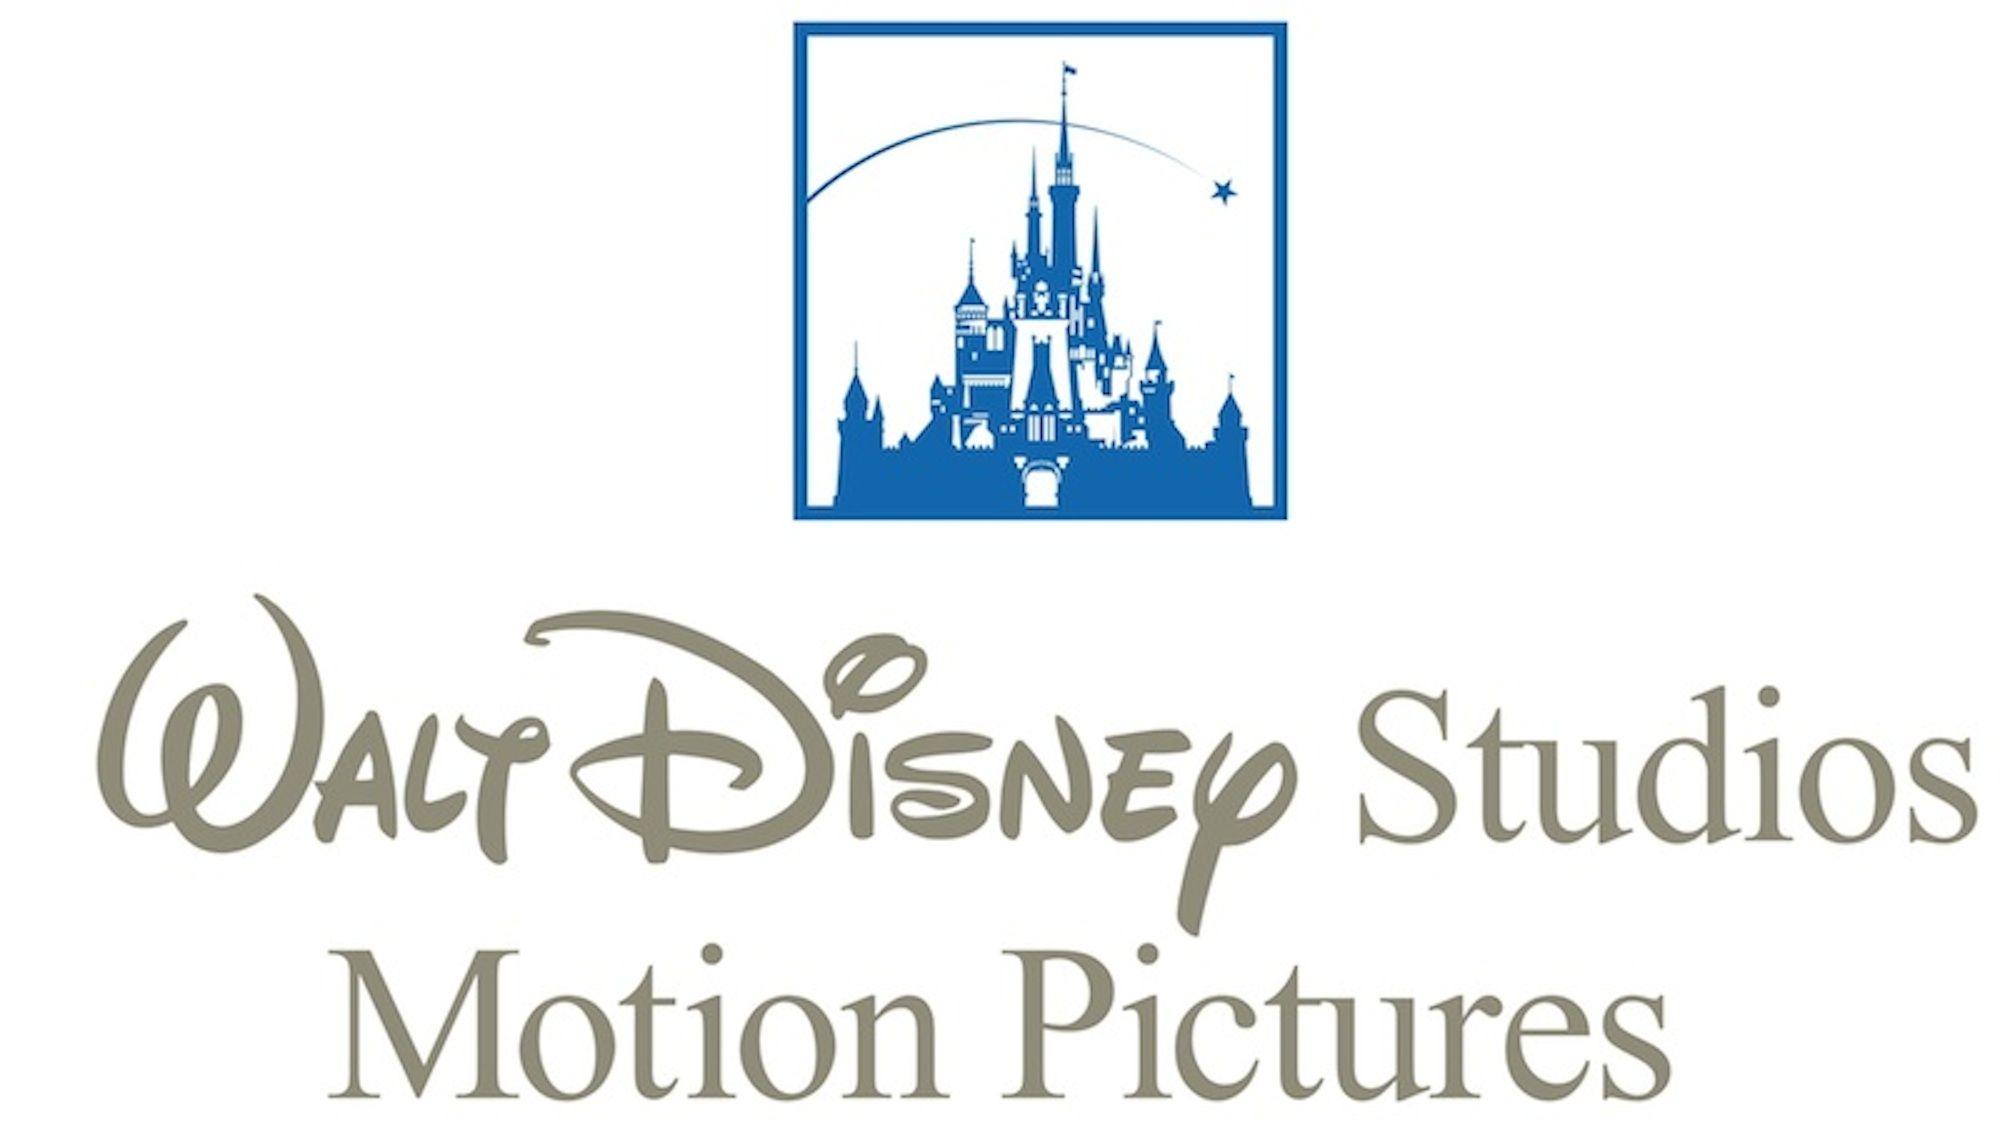 Walt Disney Studios Motion Pictures Logo - Frozen production process | Piktochart Visual Editor